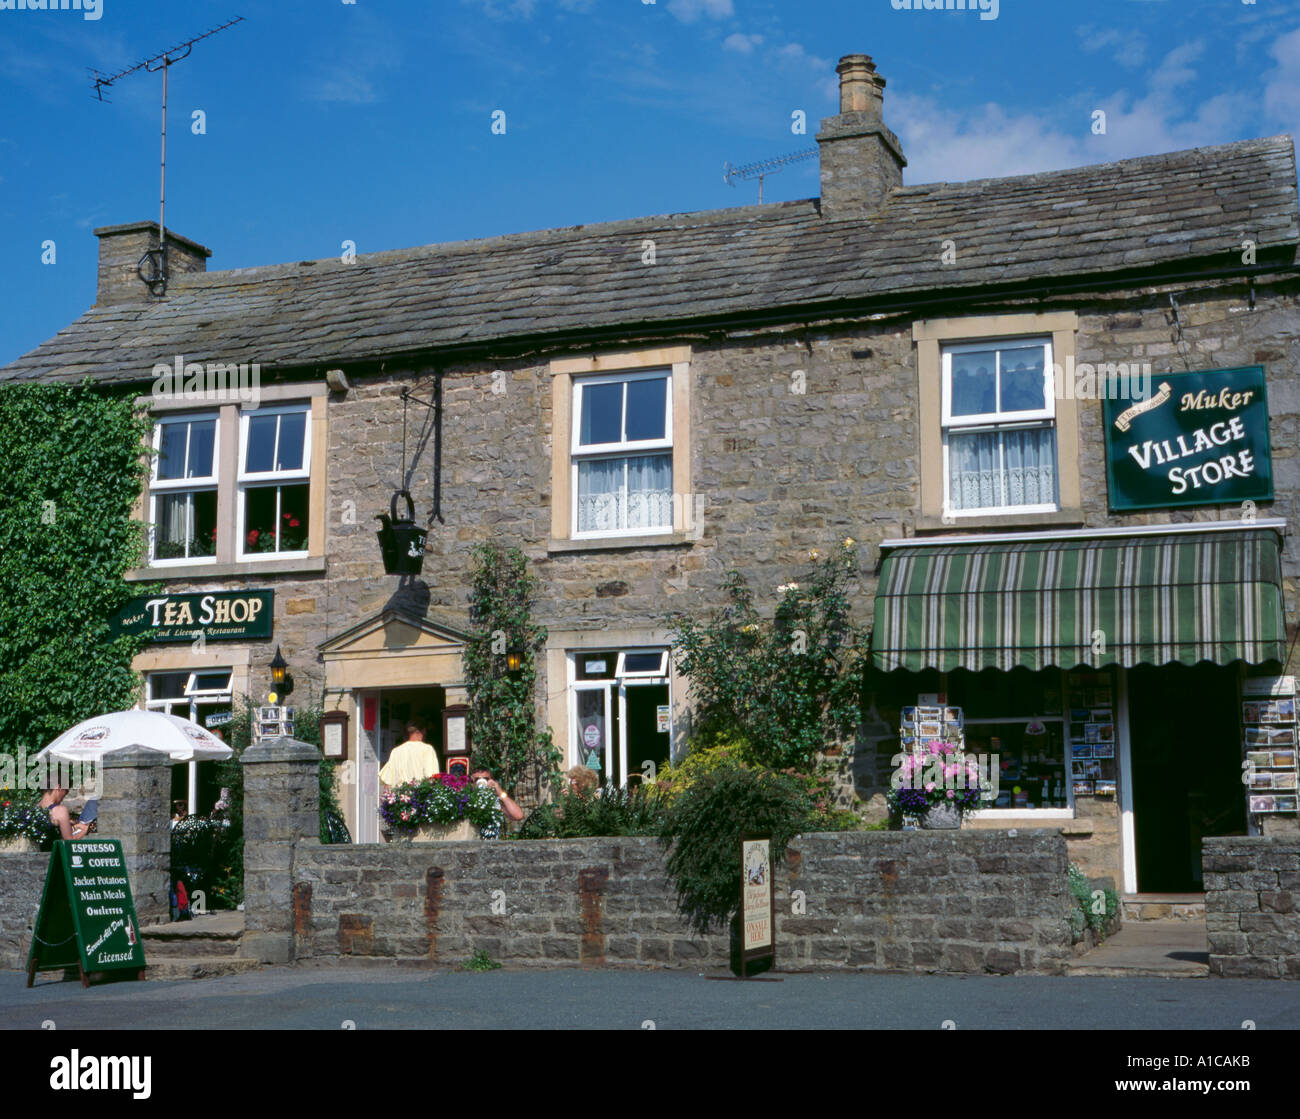 Tea Shop and Village Store, Muker, Upper Swaledale, Yorkshire Dales National Park, North Yorkshire, England, UK. Stock Photo